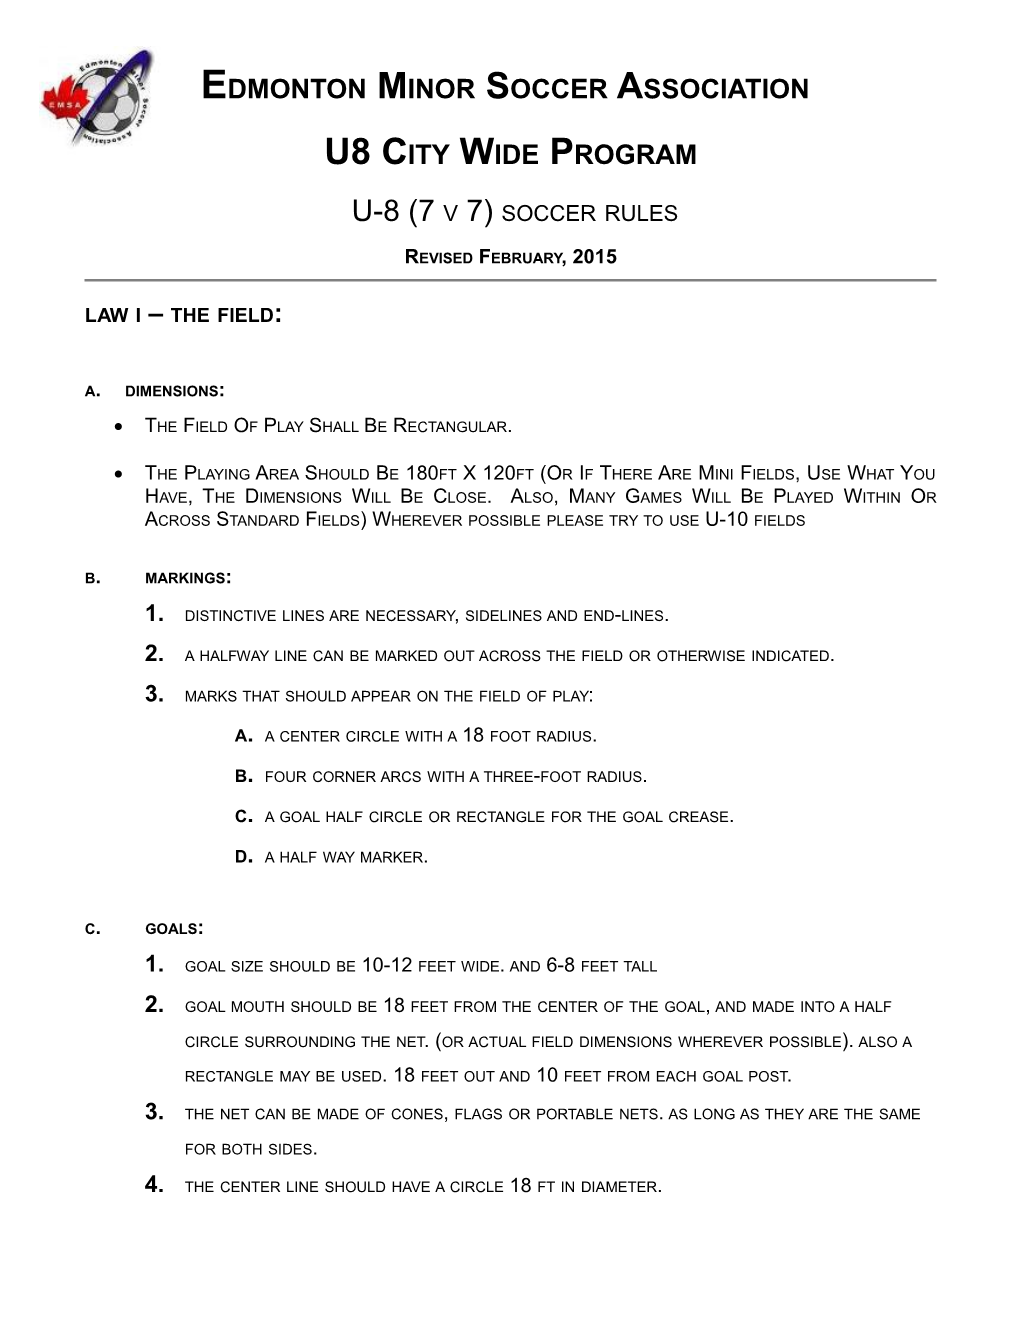 Modified Laws for U-10 Program